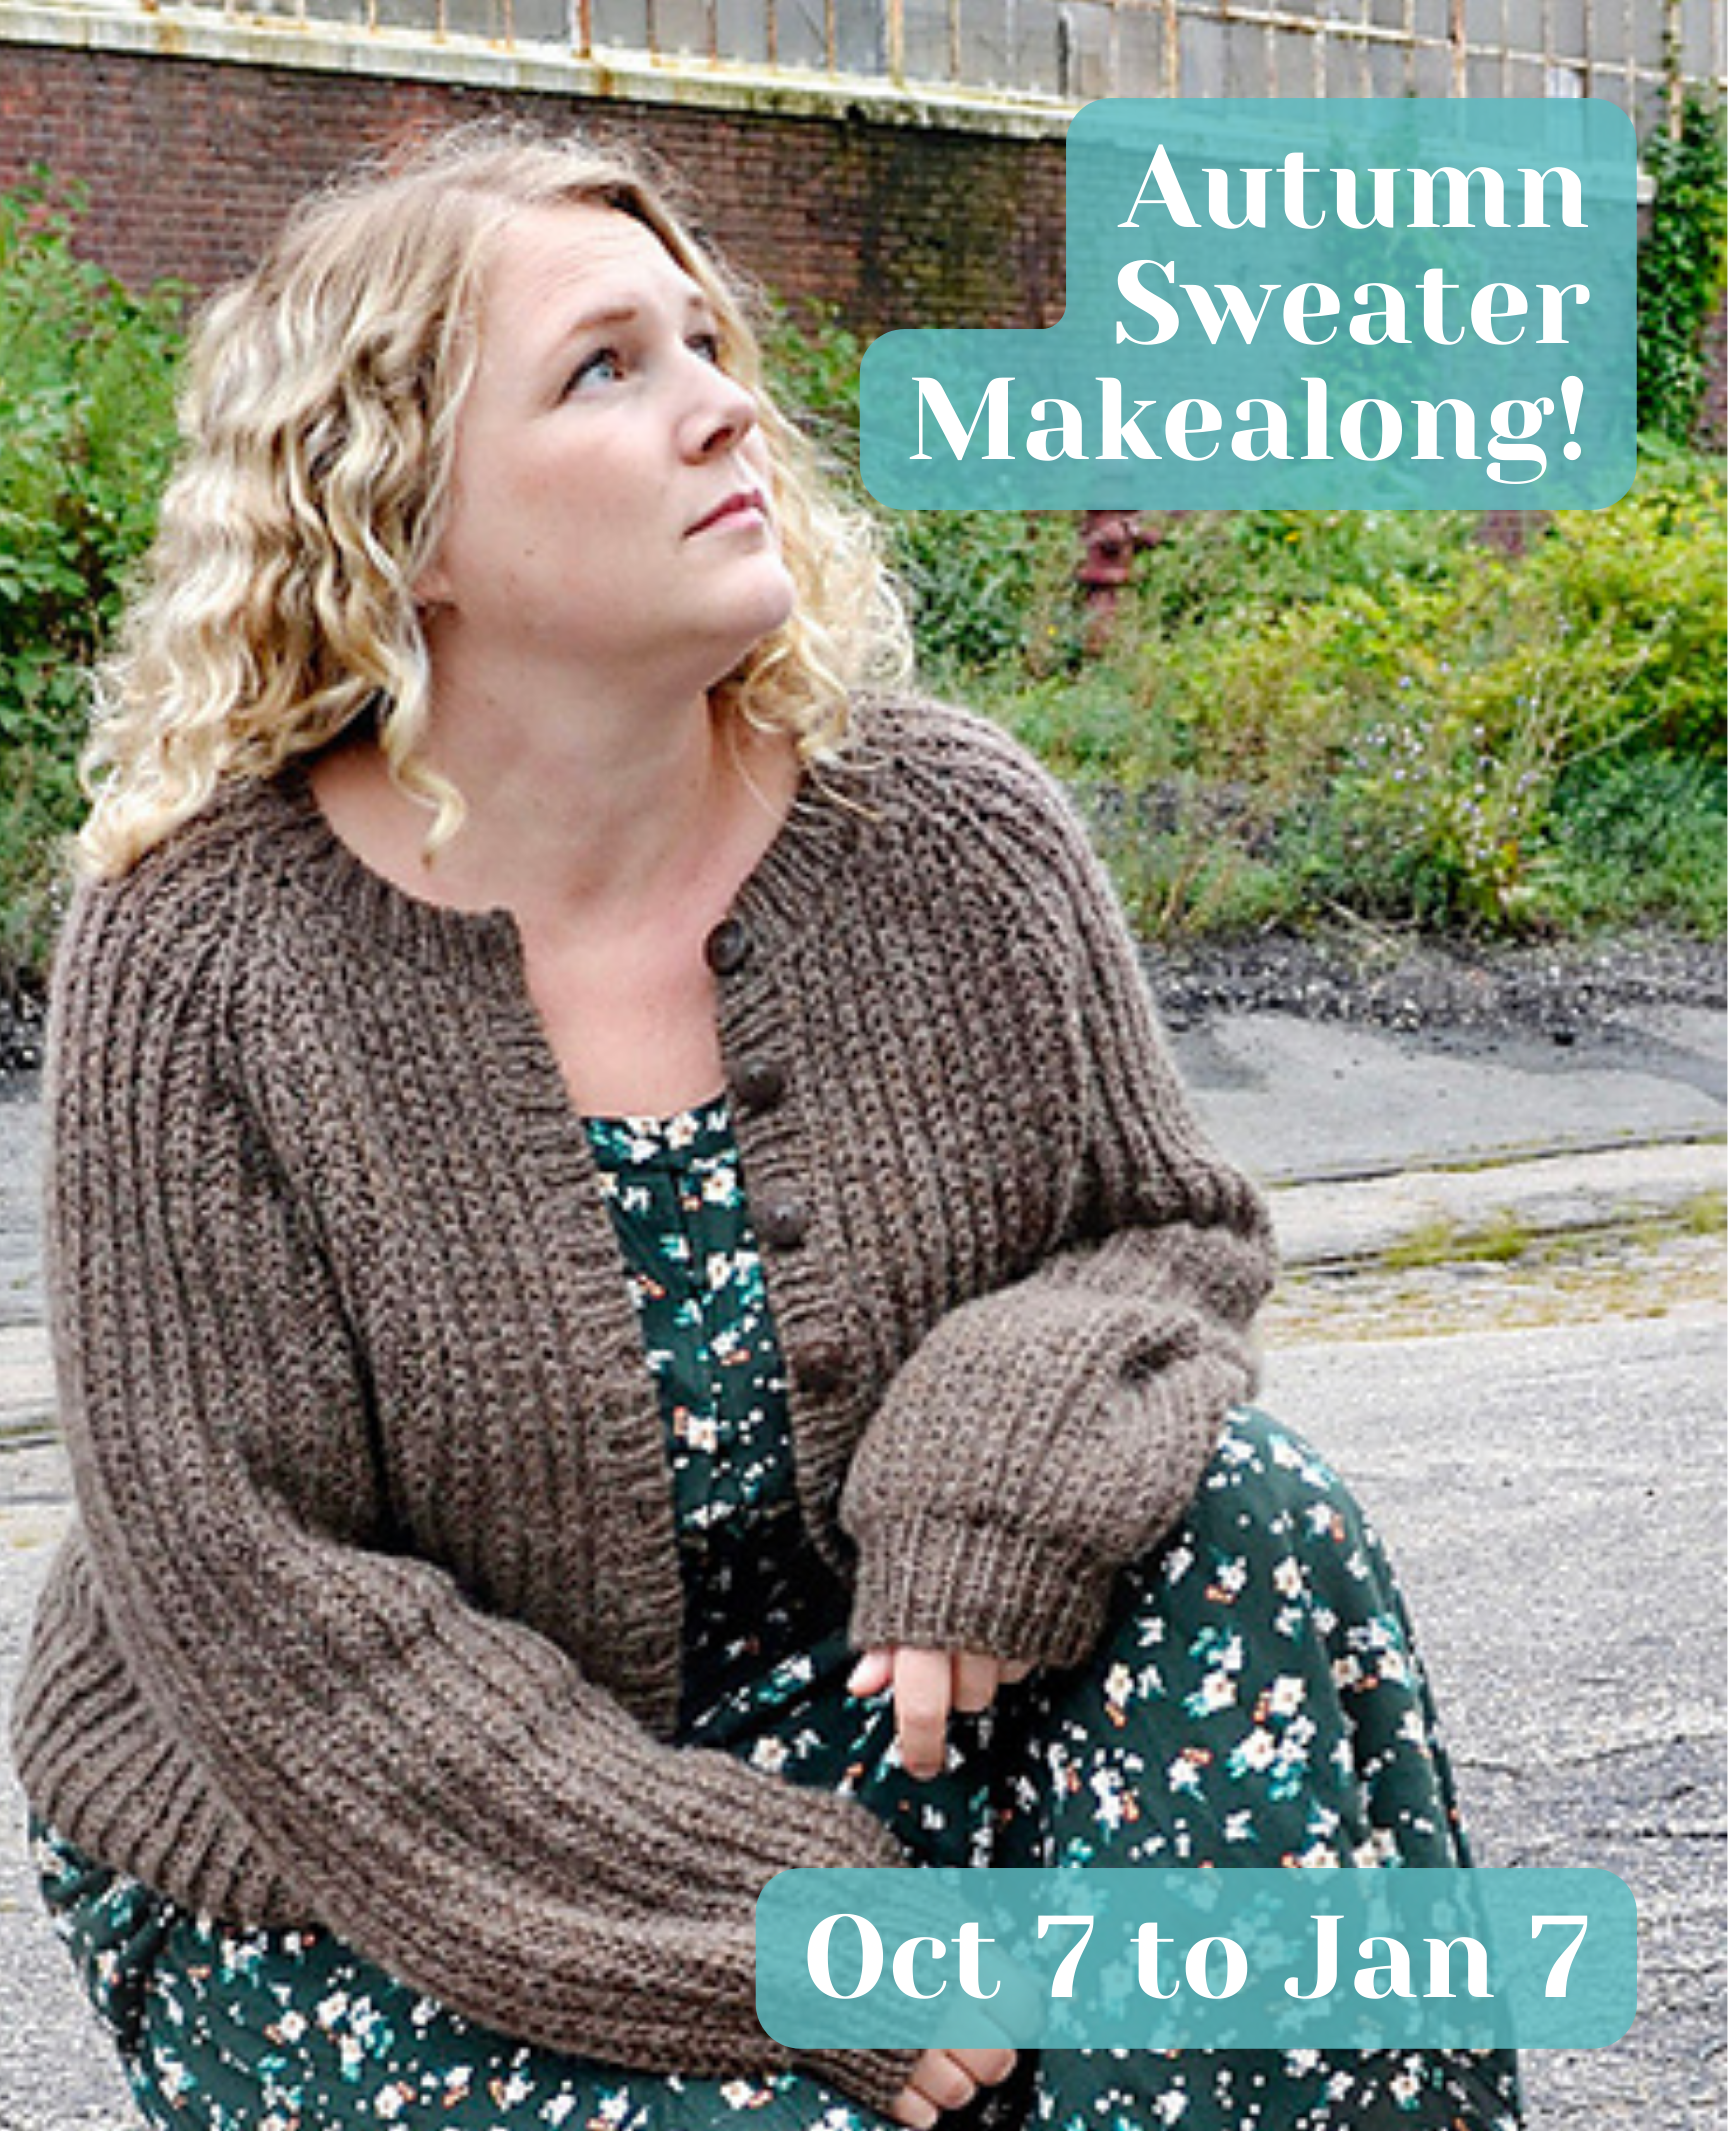 Lucky Brand Women's Crochet Yoke Pullover